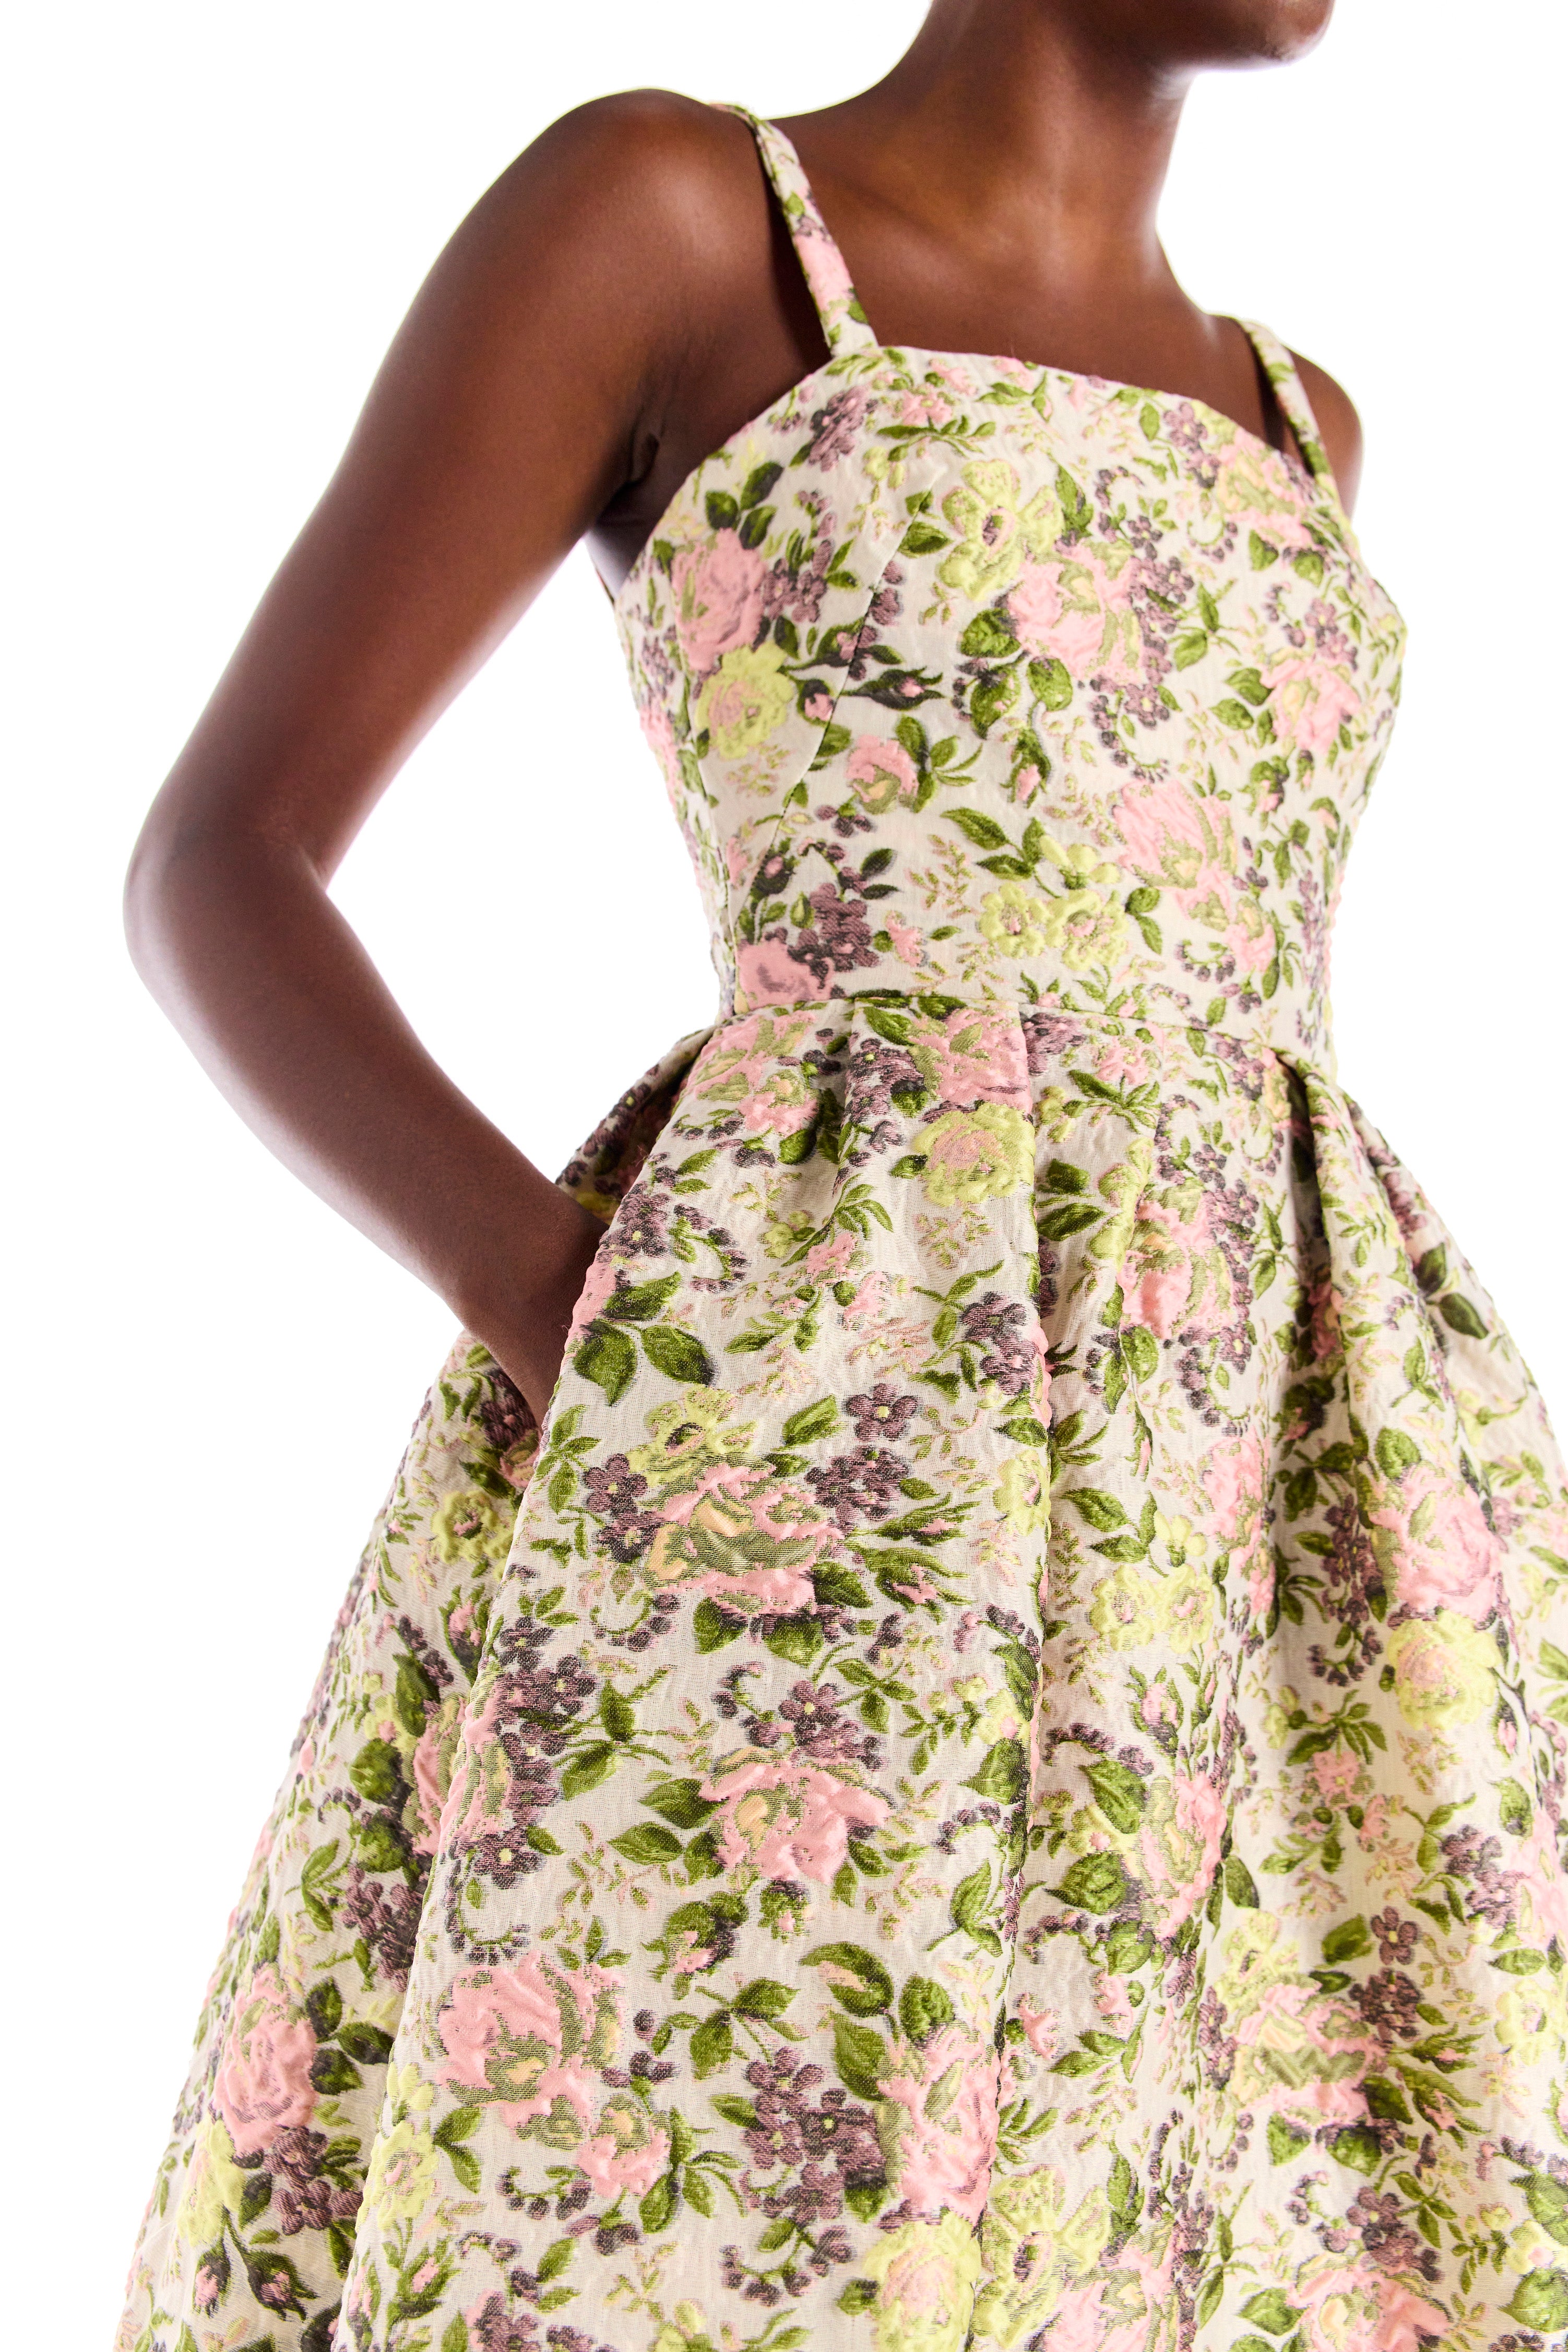 Floral Jacquard Tea Length Dress